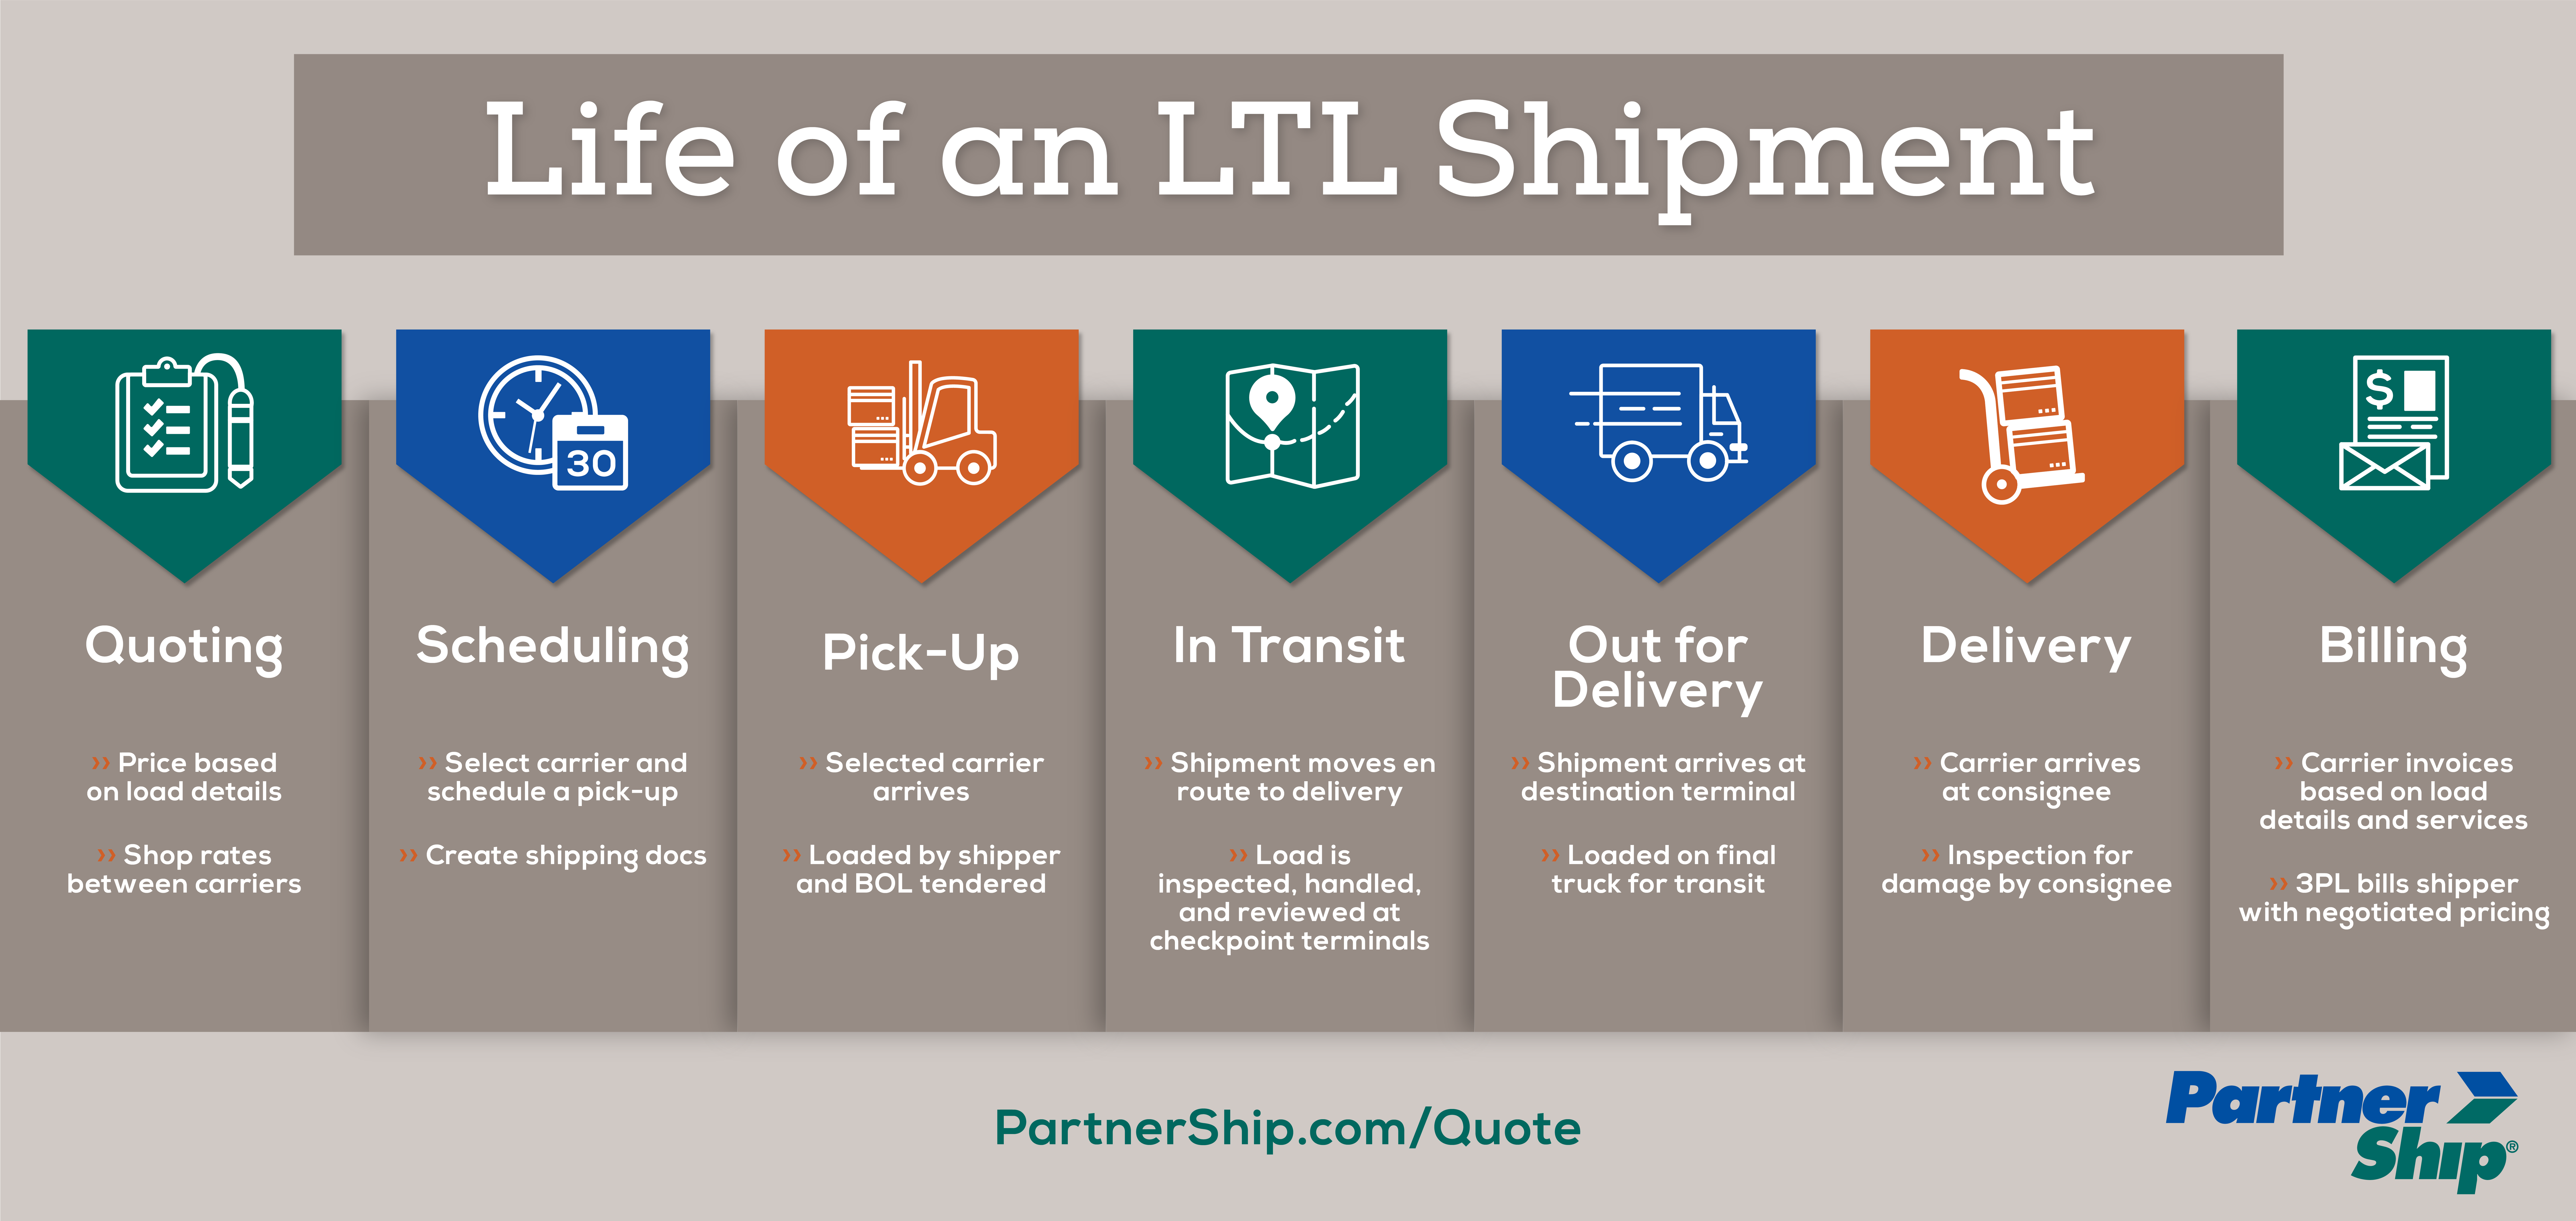 Life of LTL Shipment Infographic